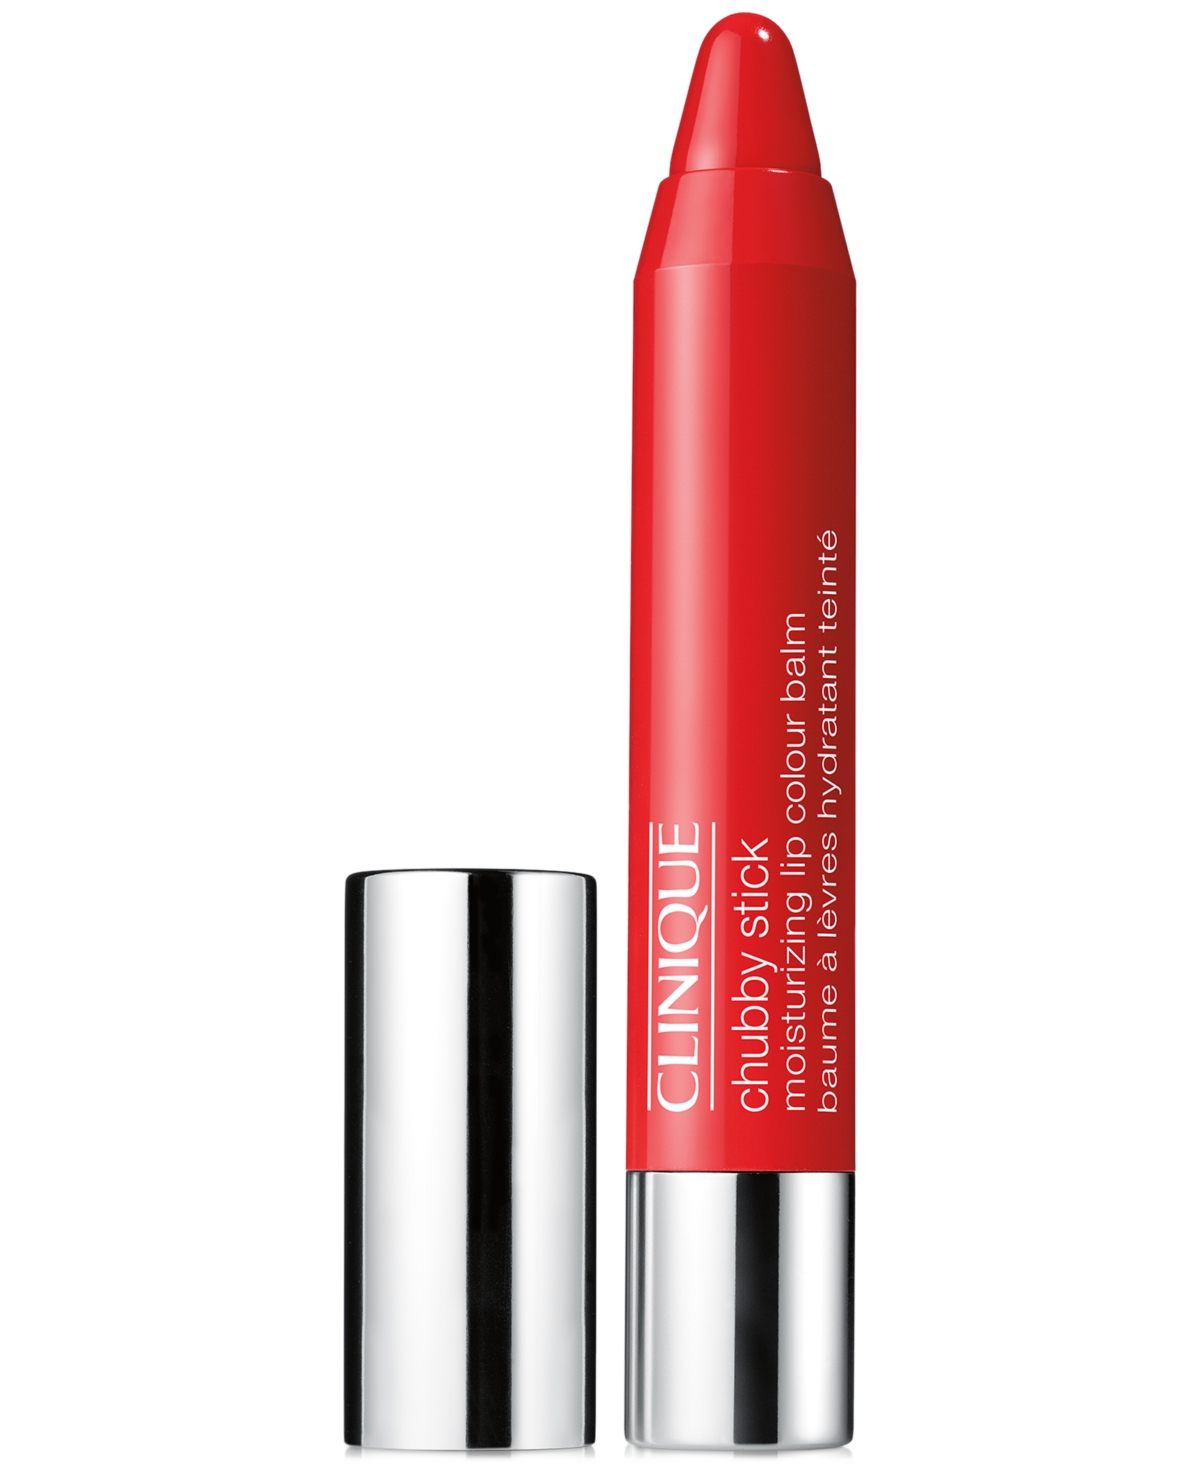 UPC 020714568832 product image for Clinique Chubby Stick Moisturizing Lip Colour Balm, 0.1 oz | upcitemdb.com